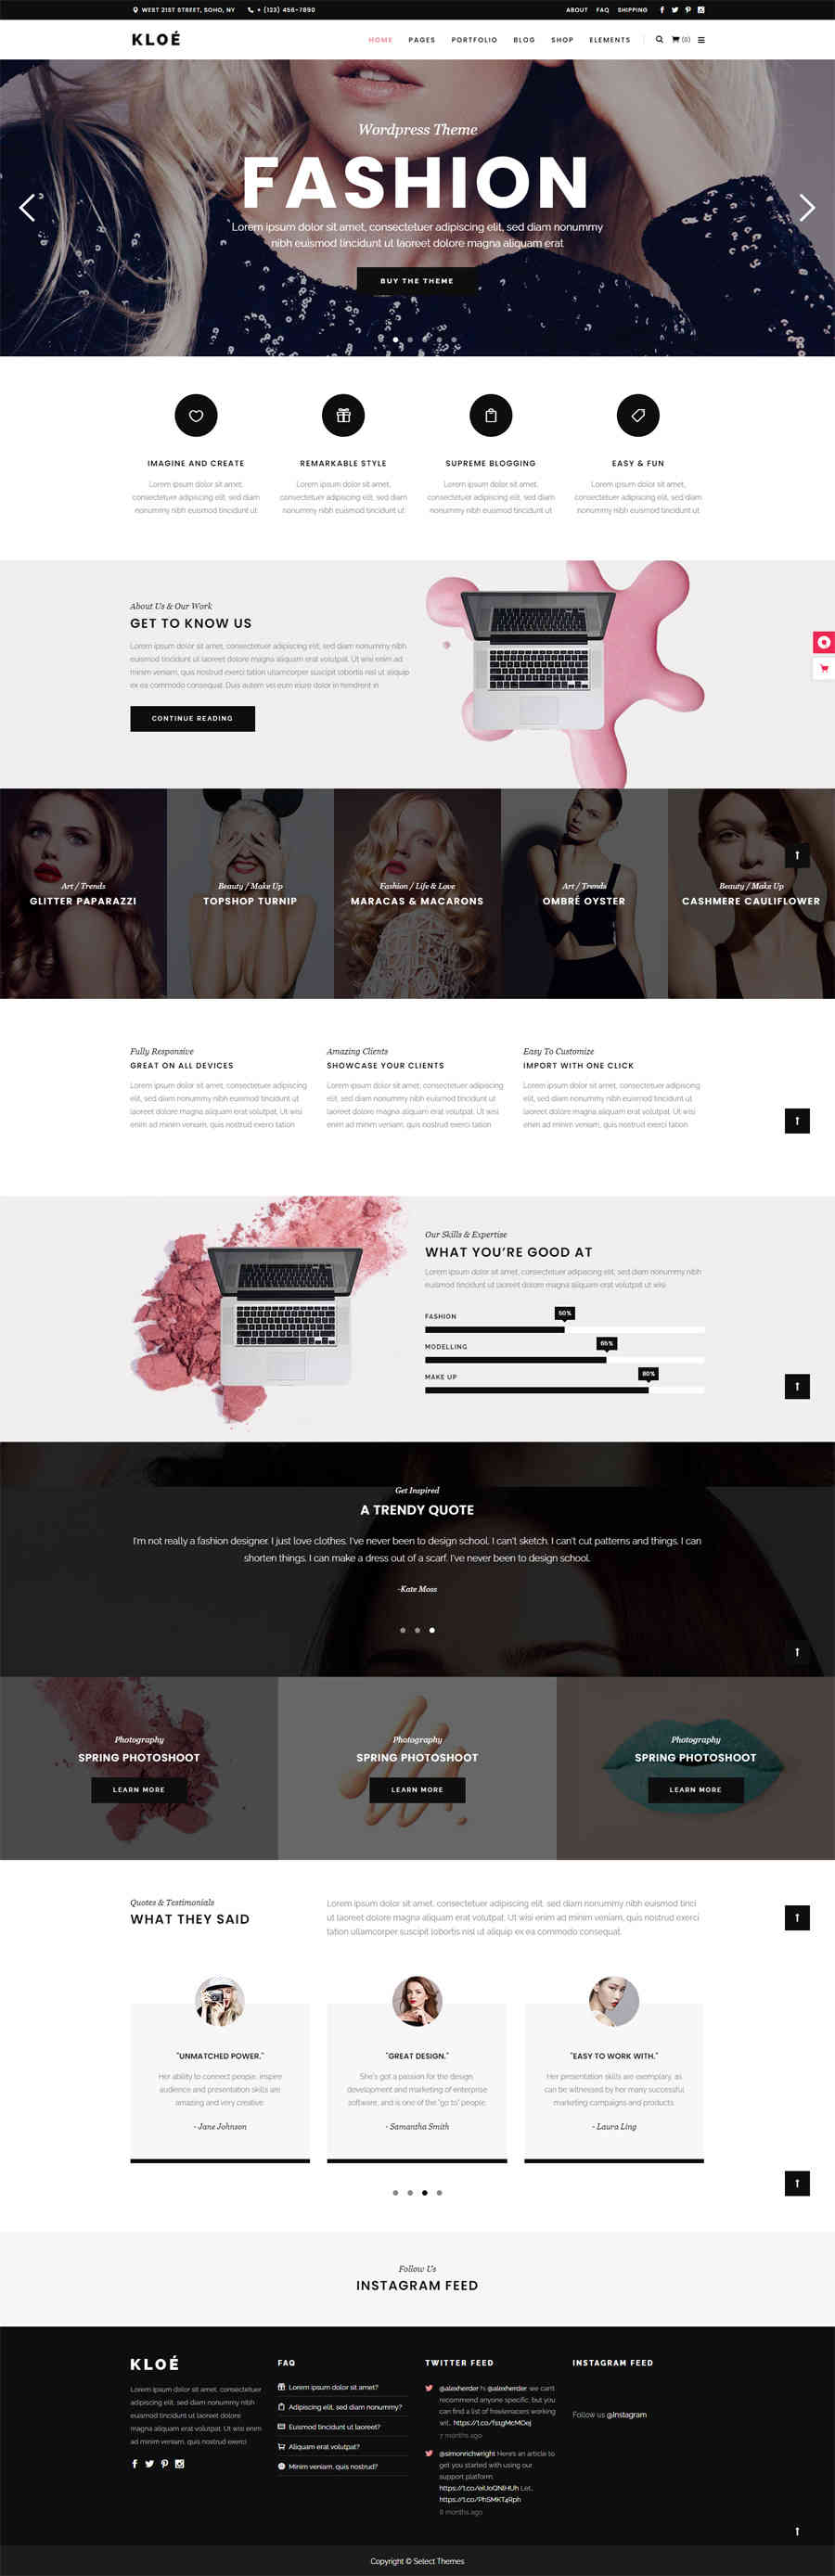 thiet ke website tmi fashion shop 4041